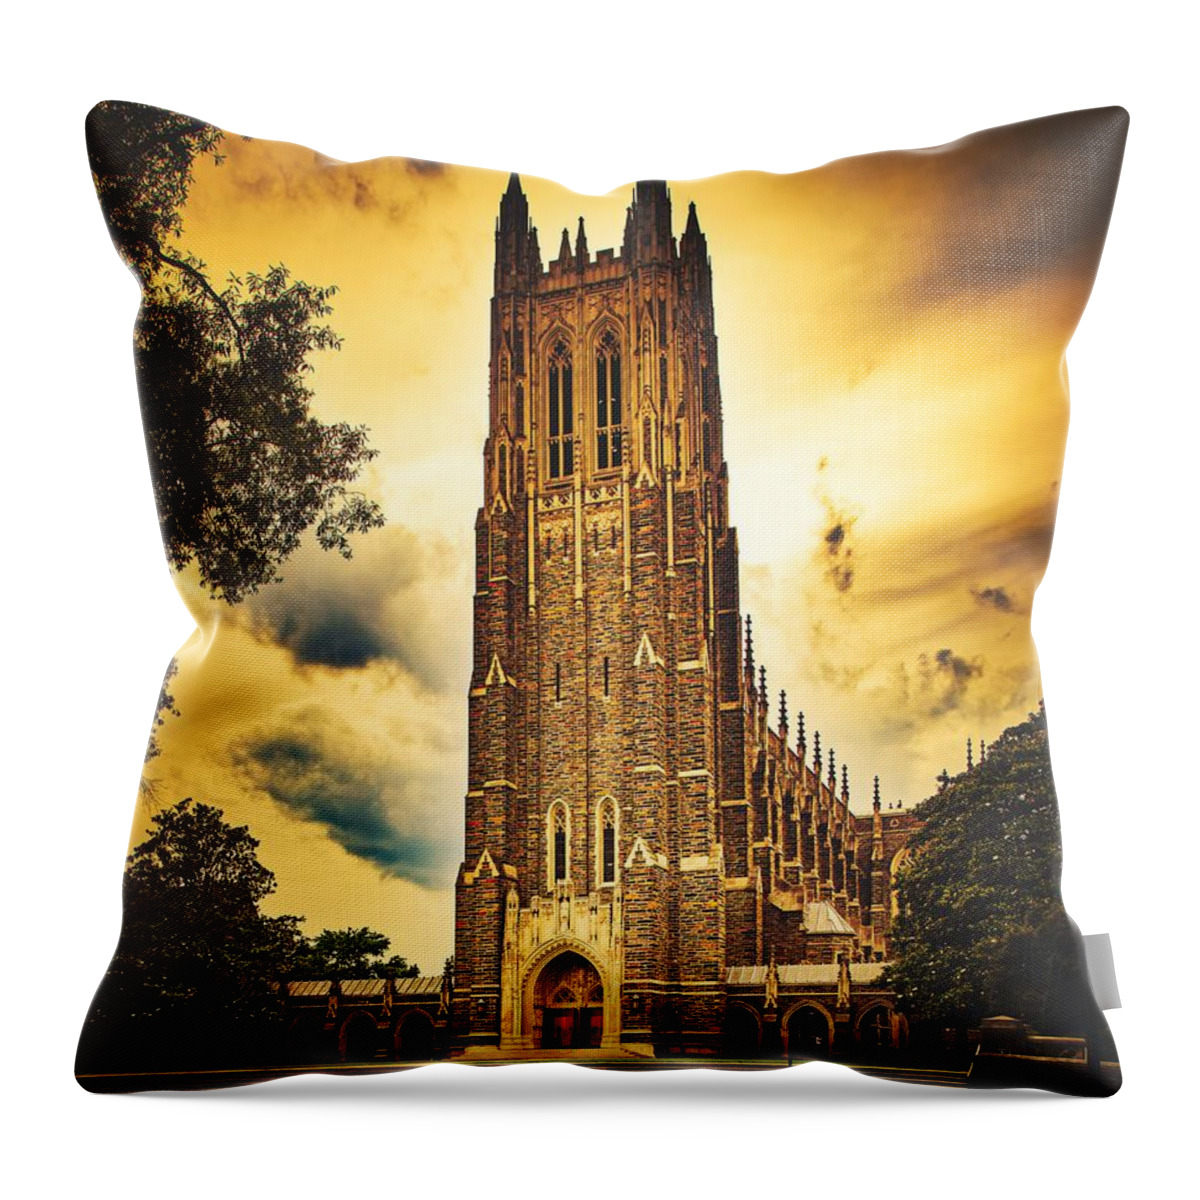 Duke University Throw Pillow featuring the photograph Duke University Chapel At Dusk by Mountain Dreams